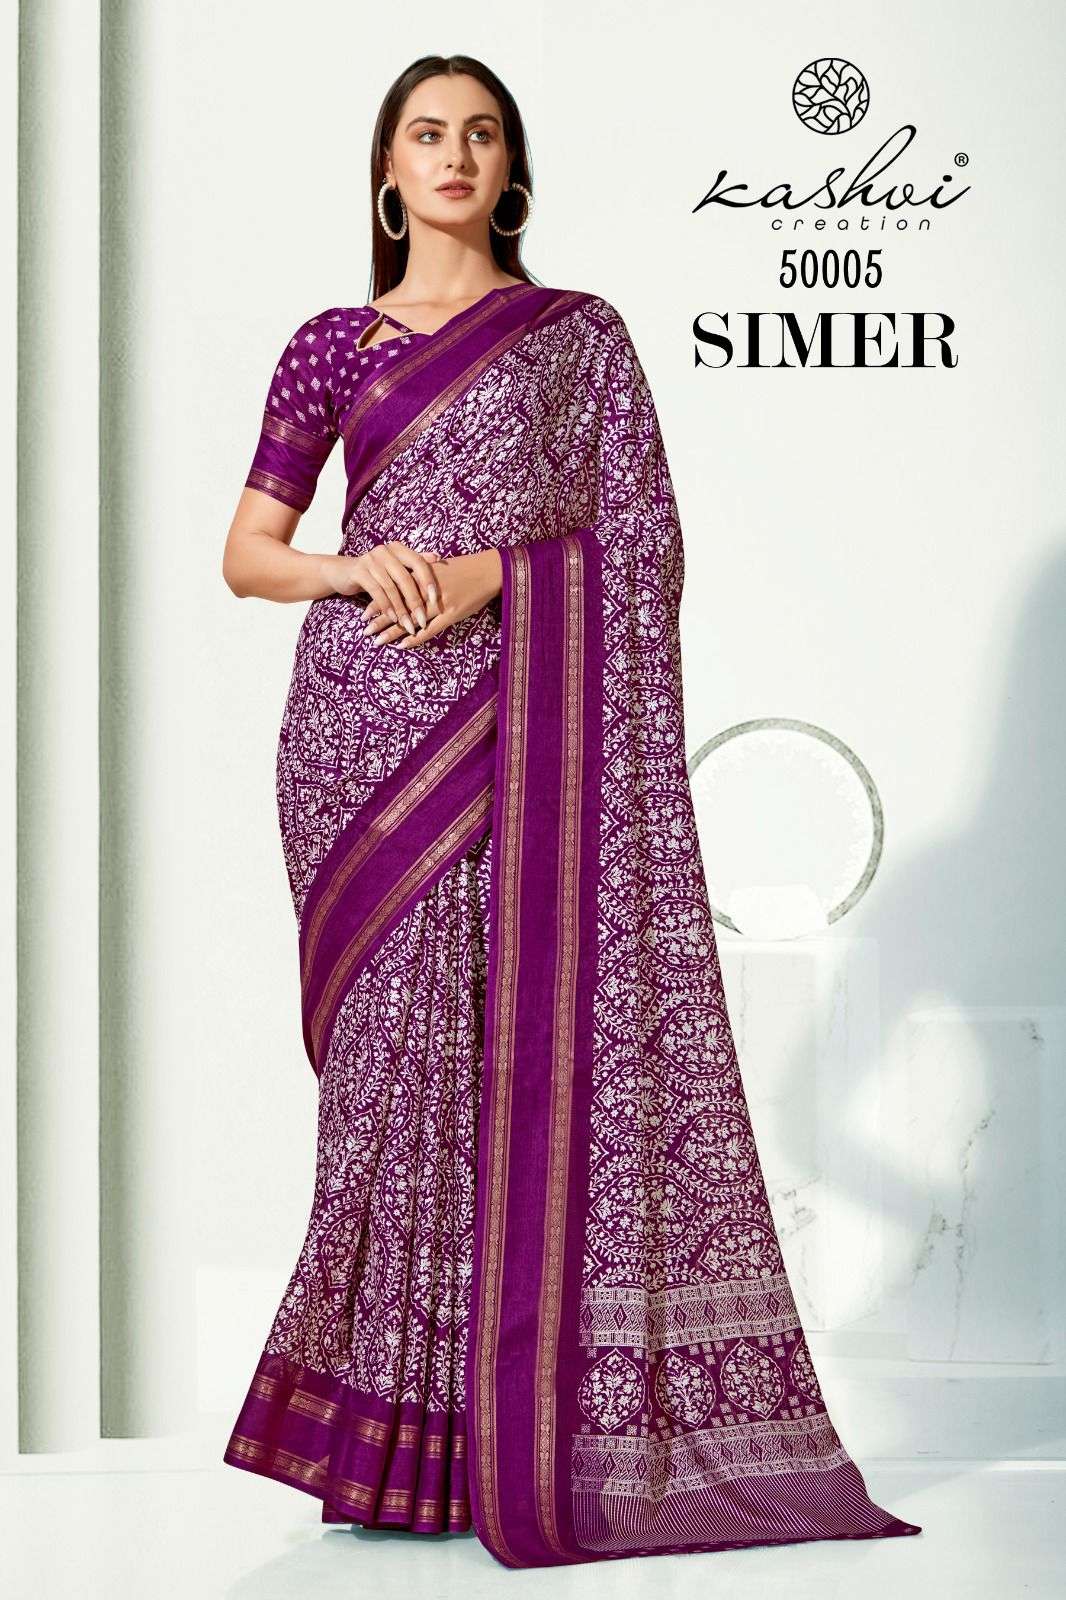 Lt fabrics Kashvi Creation Simar Jacquard weaving design sar...